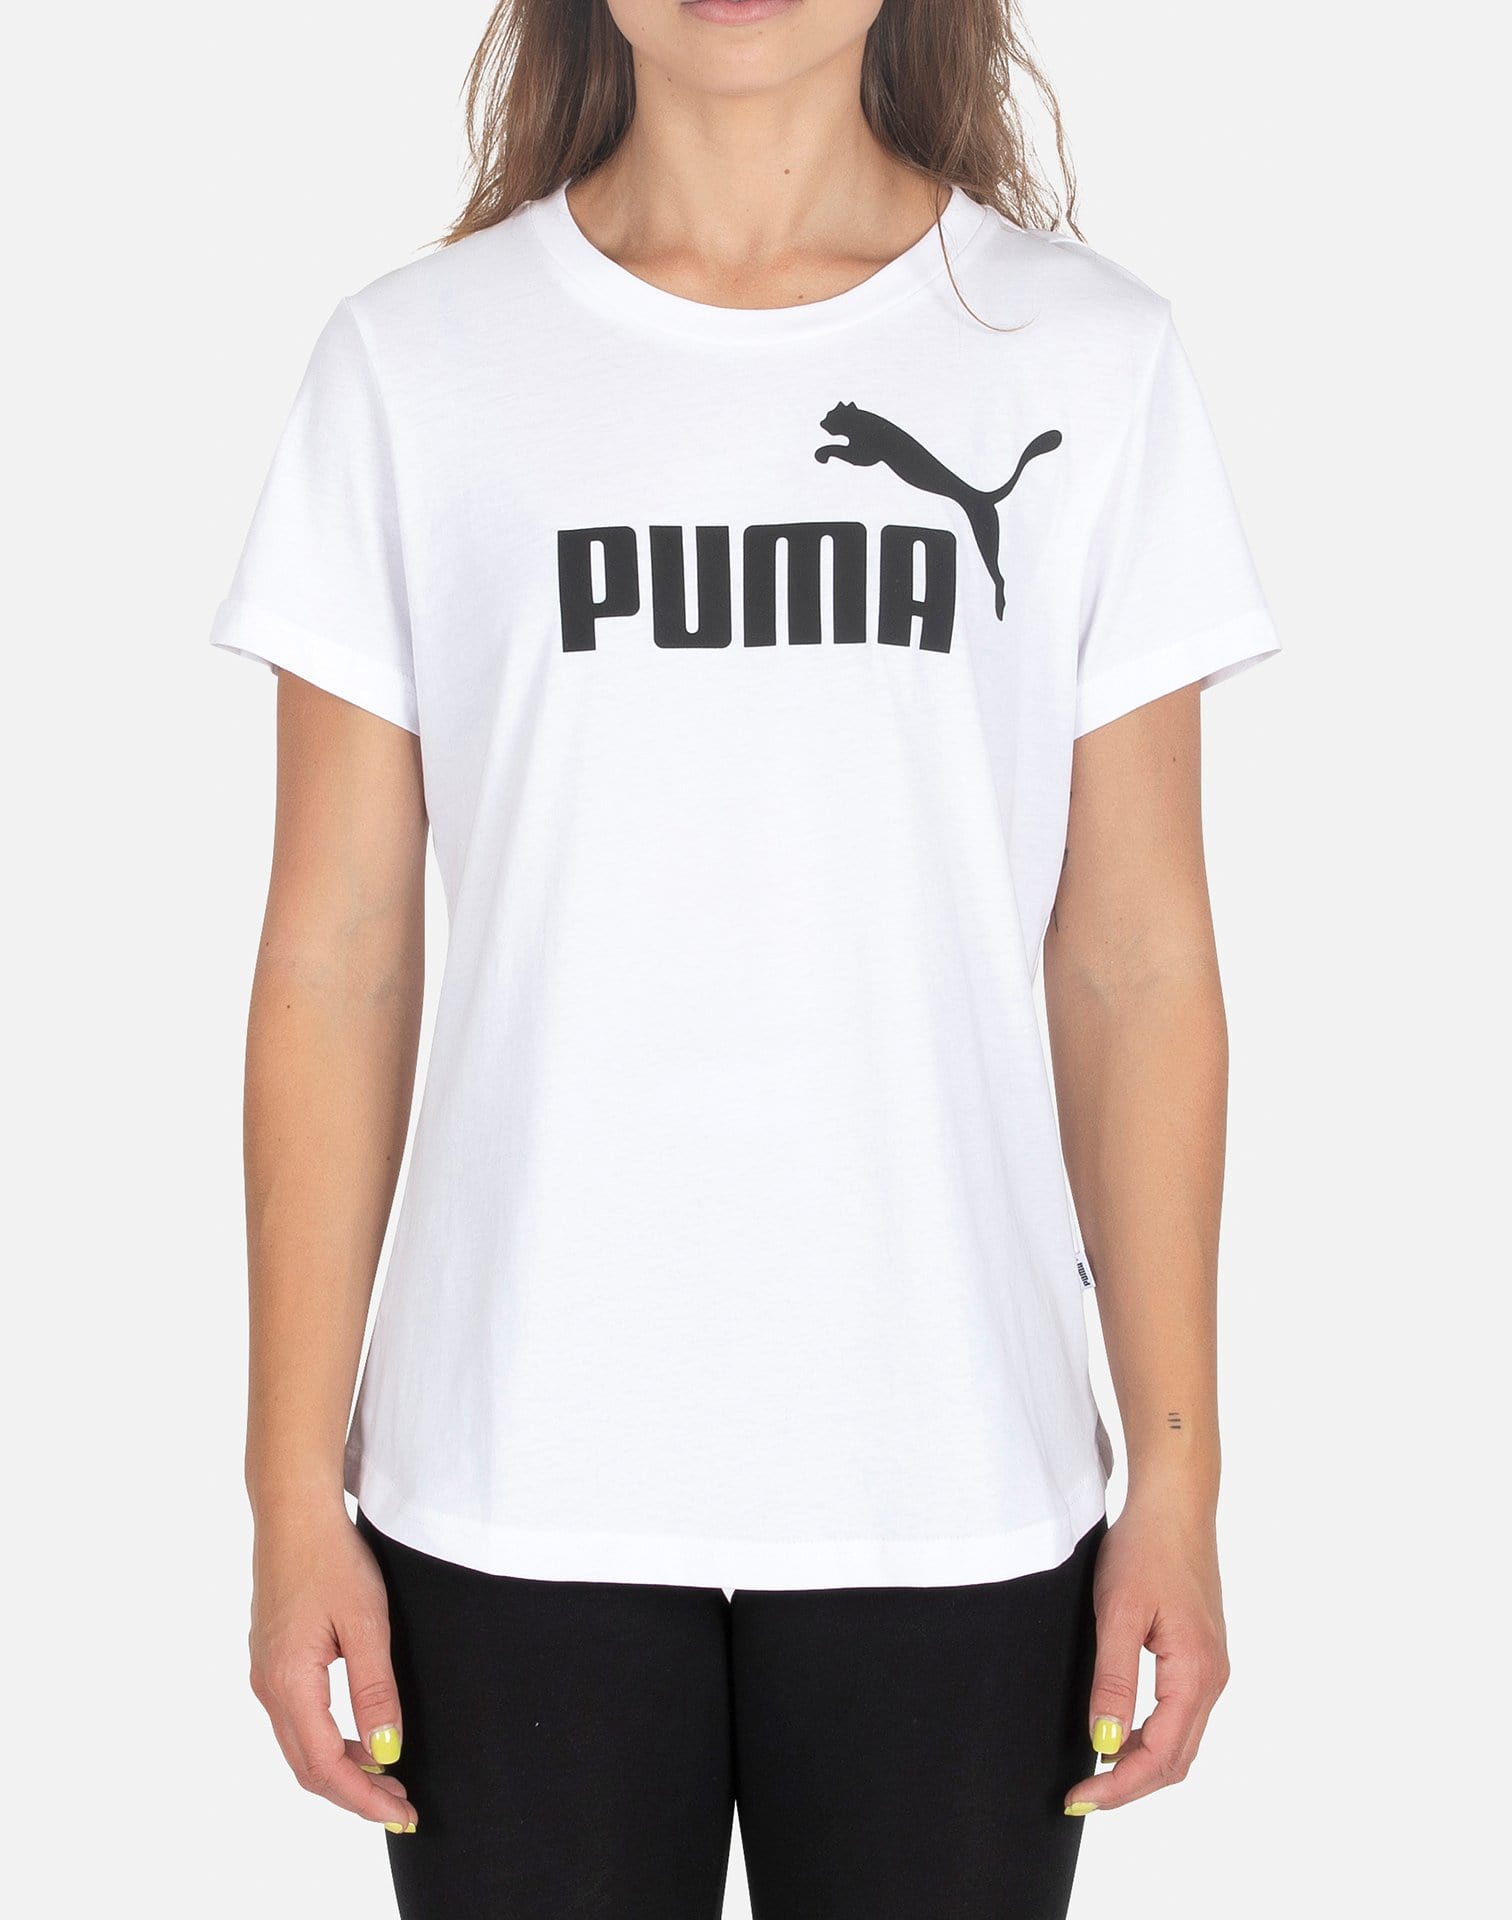 PUMA Women's Amplified Tee